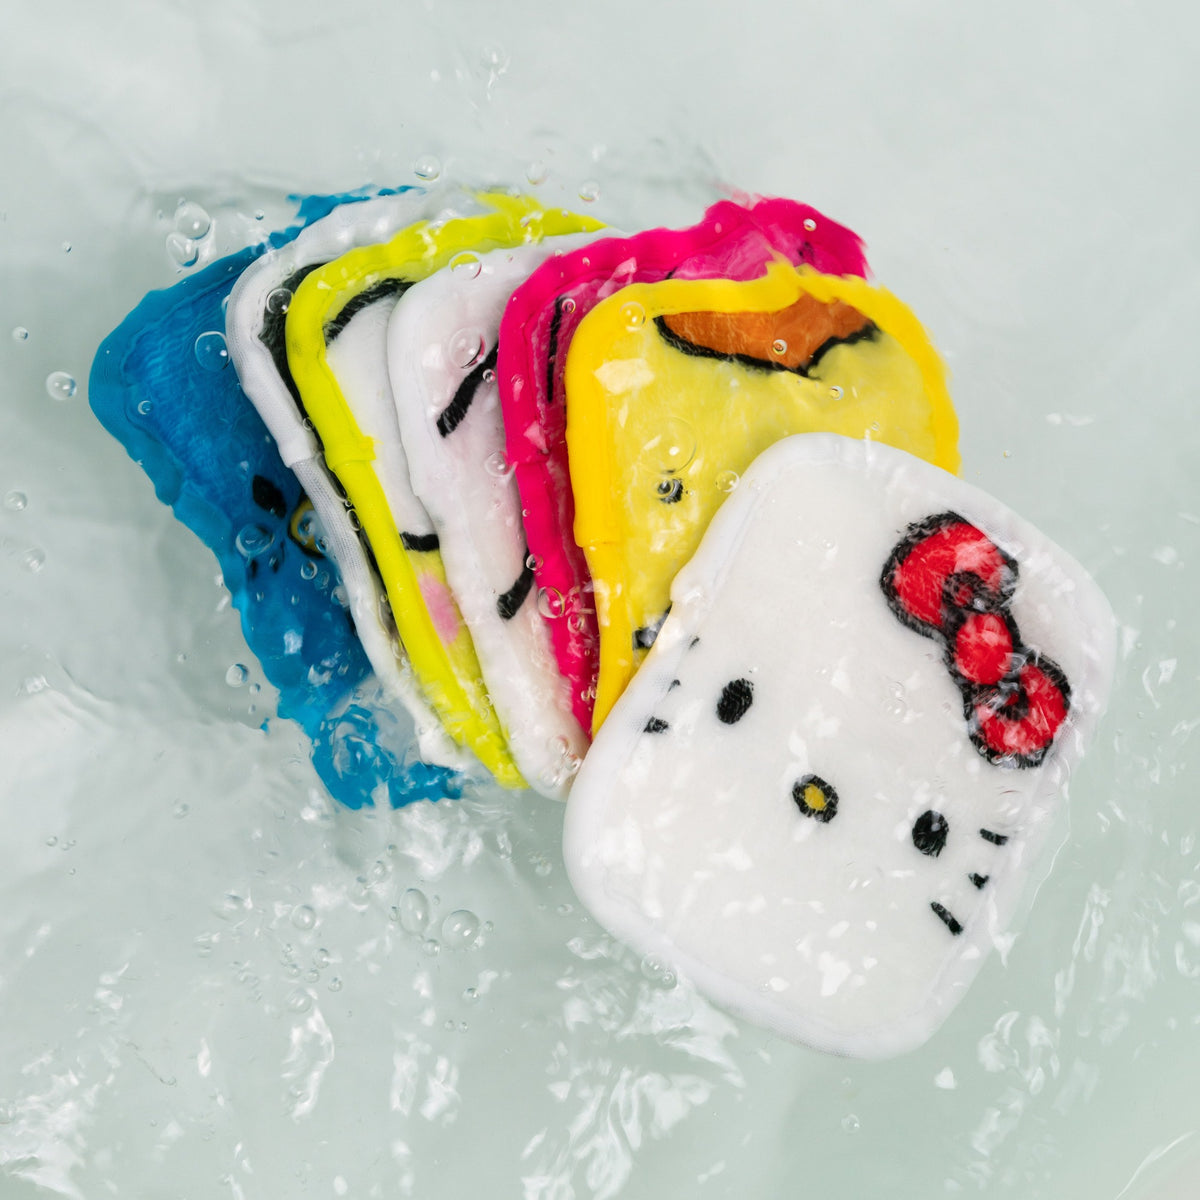 Hello Kitty and Friends x MakeUp Eraser 7-Day Set Beauty Japonesque LLC   